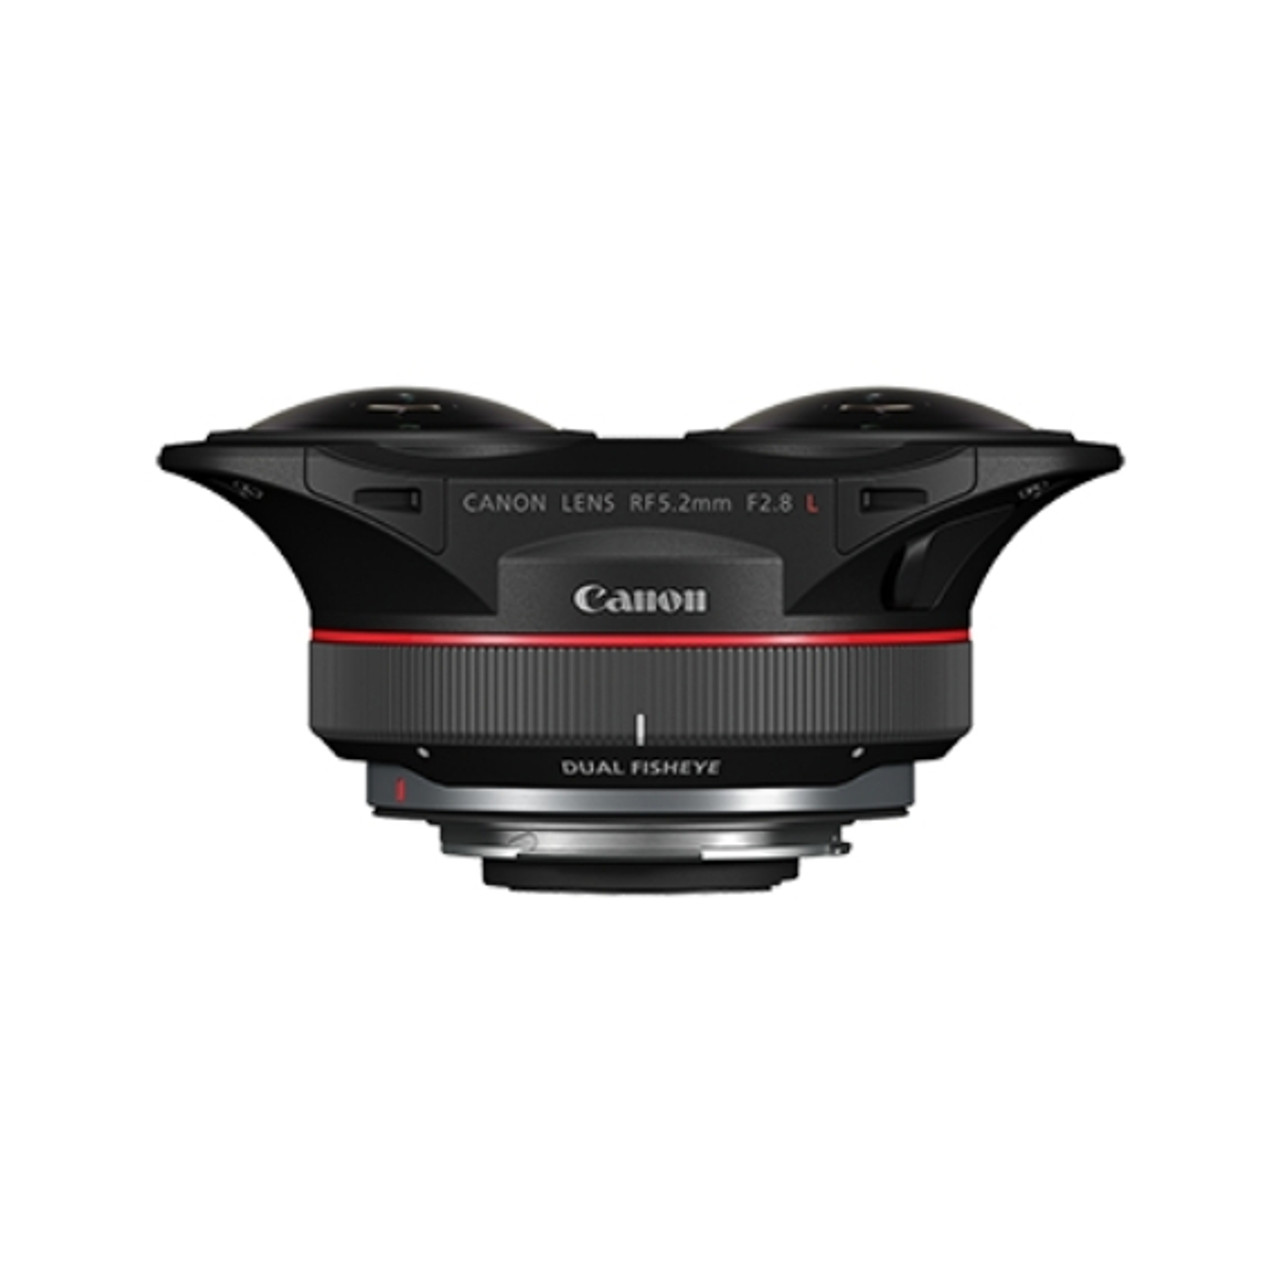 Canon RF 5.2mm F2.8 L Dual Fisheye Lens (5554C002) | Bedfords.com